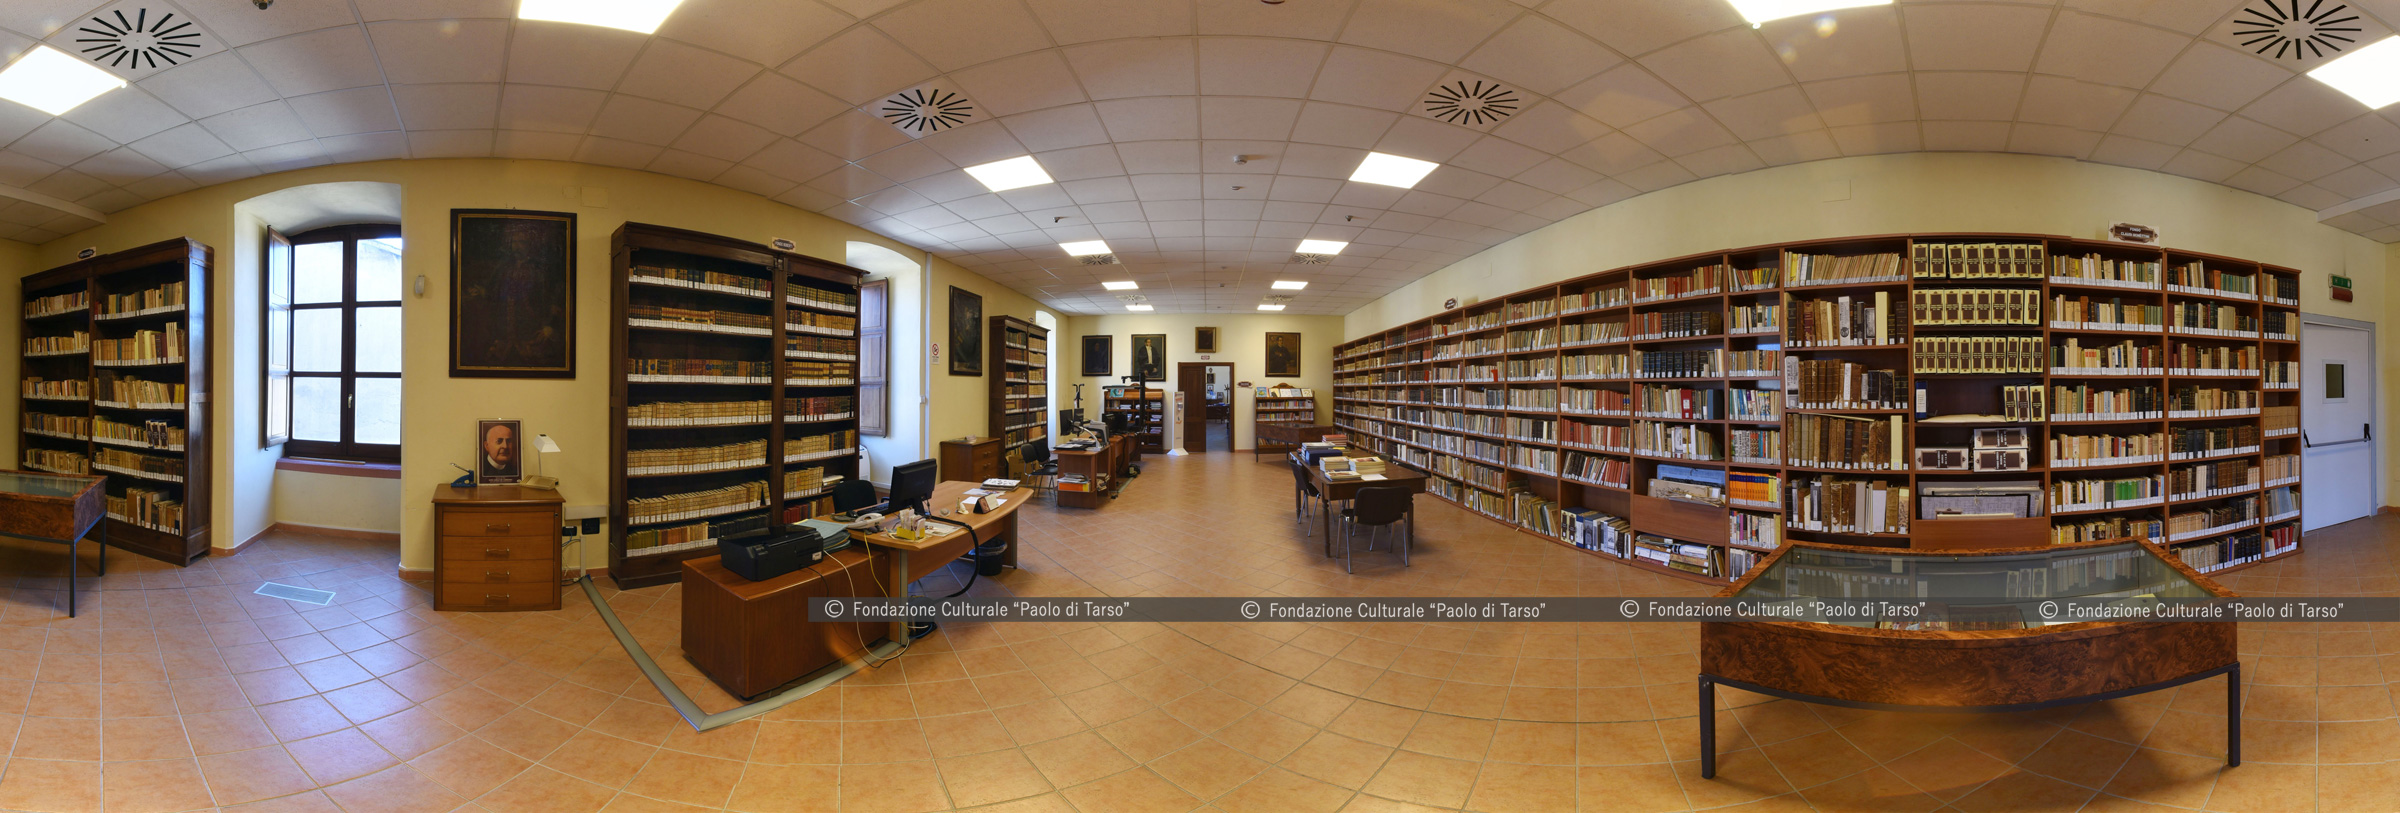 MetaversoCOSENZA - Biblioteca Nazionale